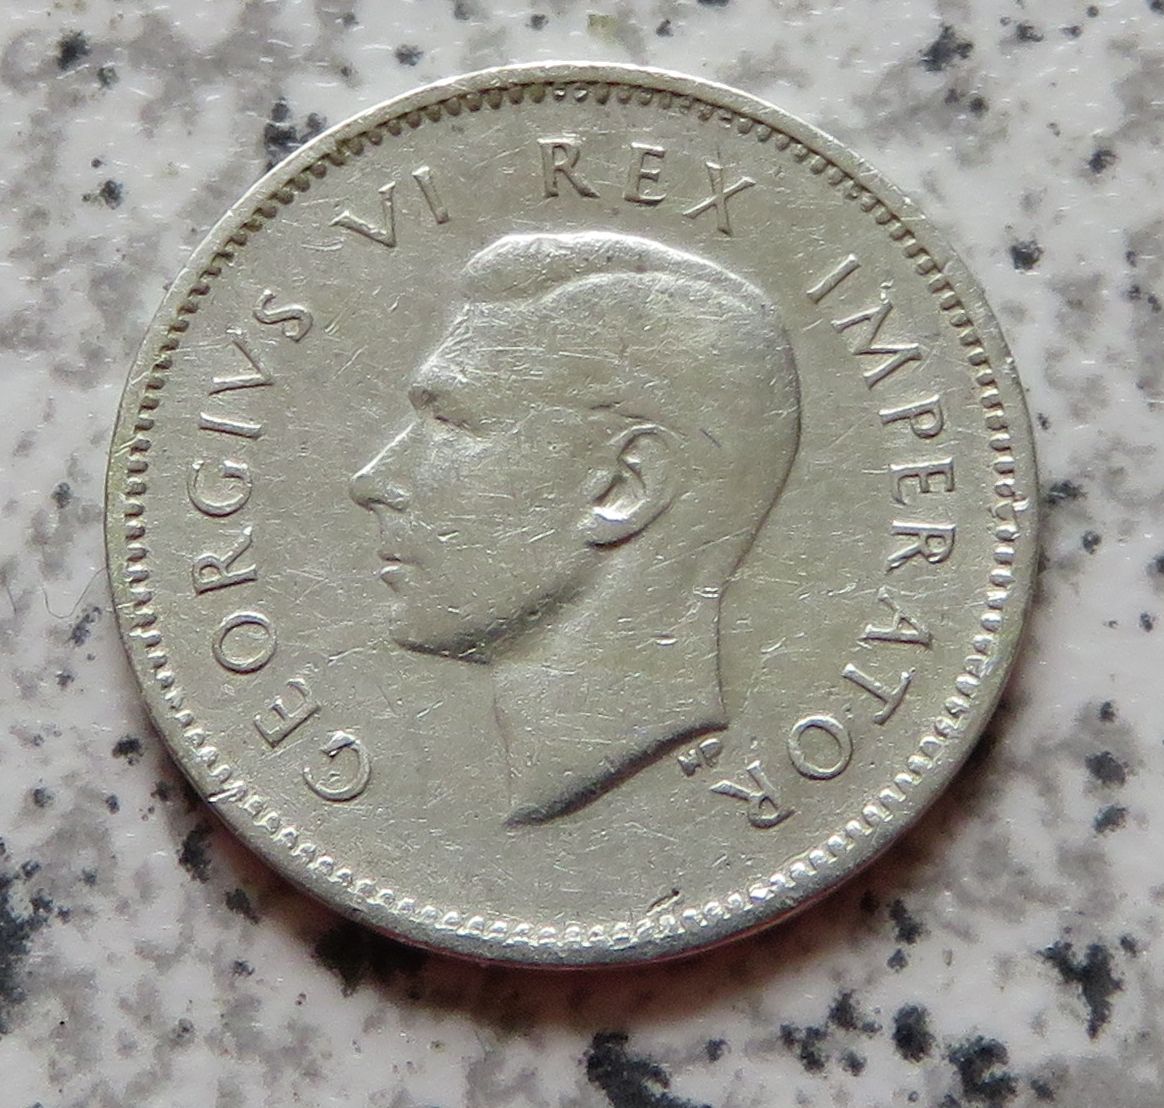  Südafrika 3 Pence 1943   